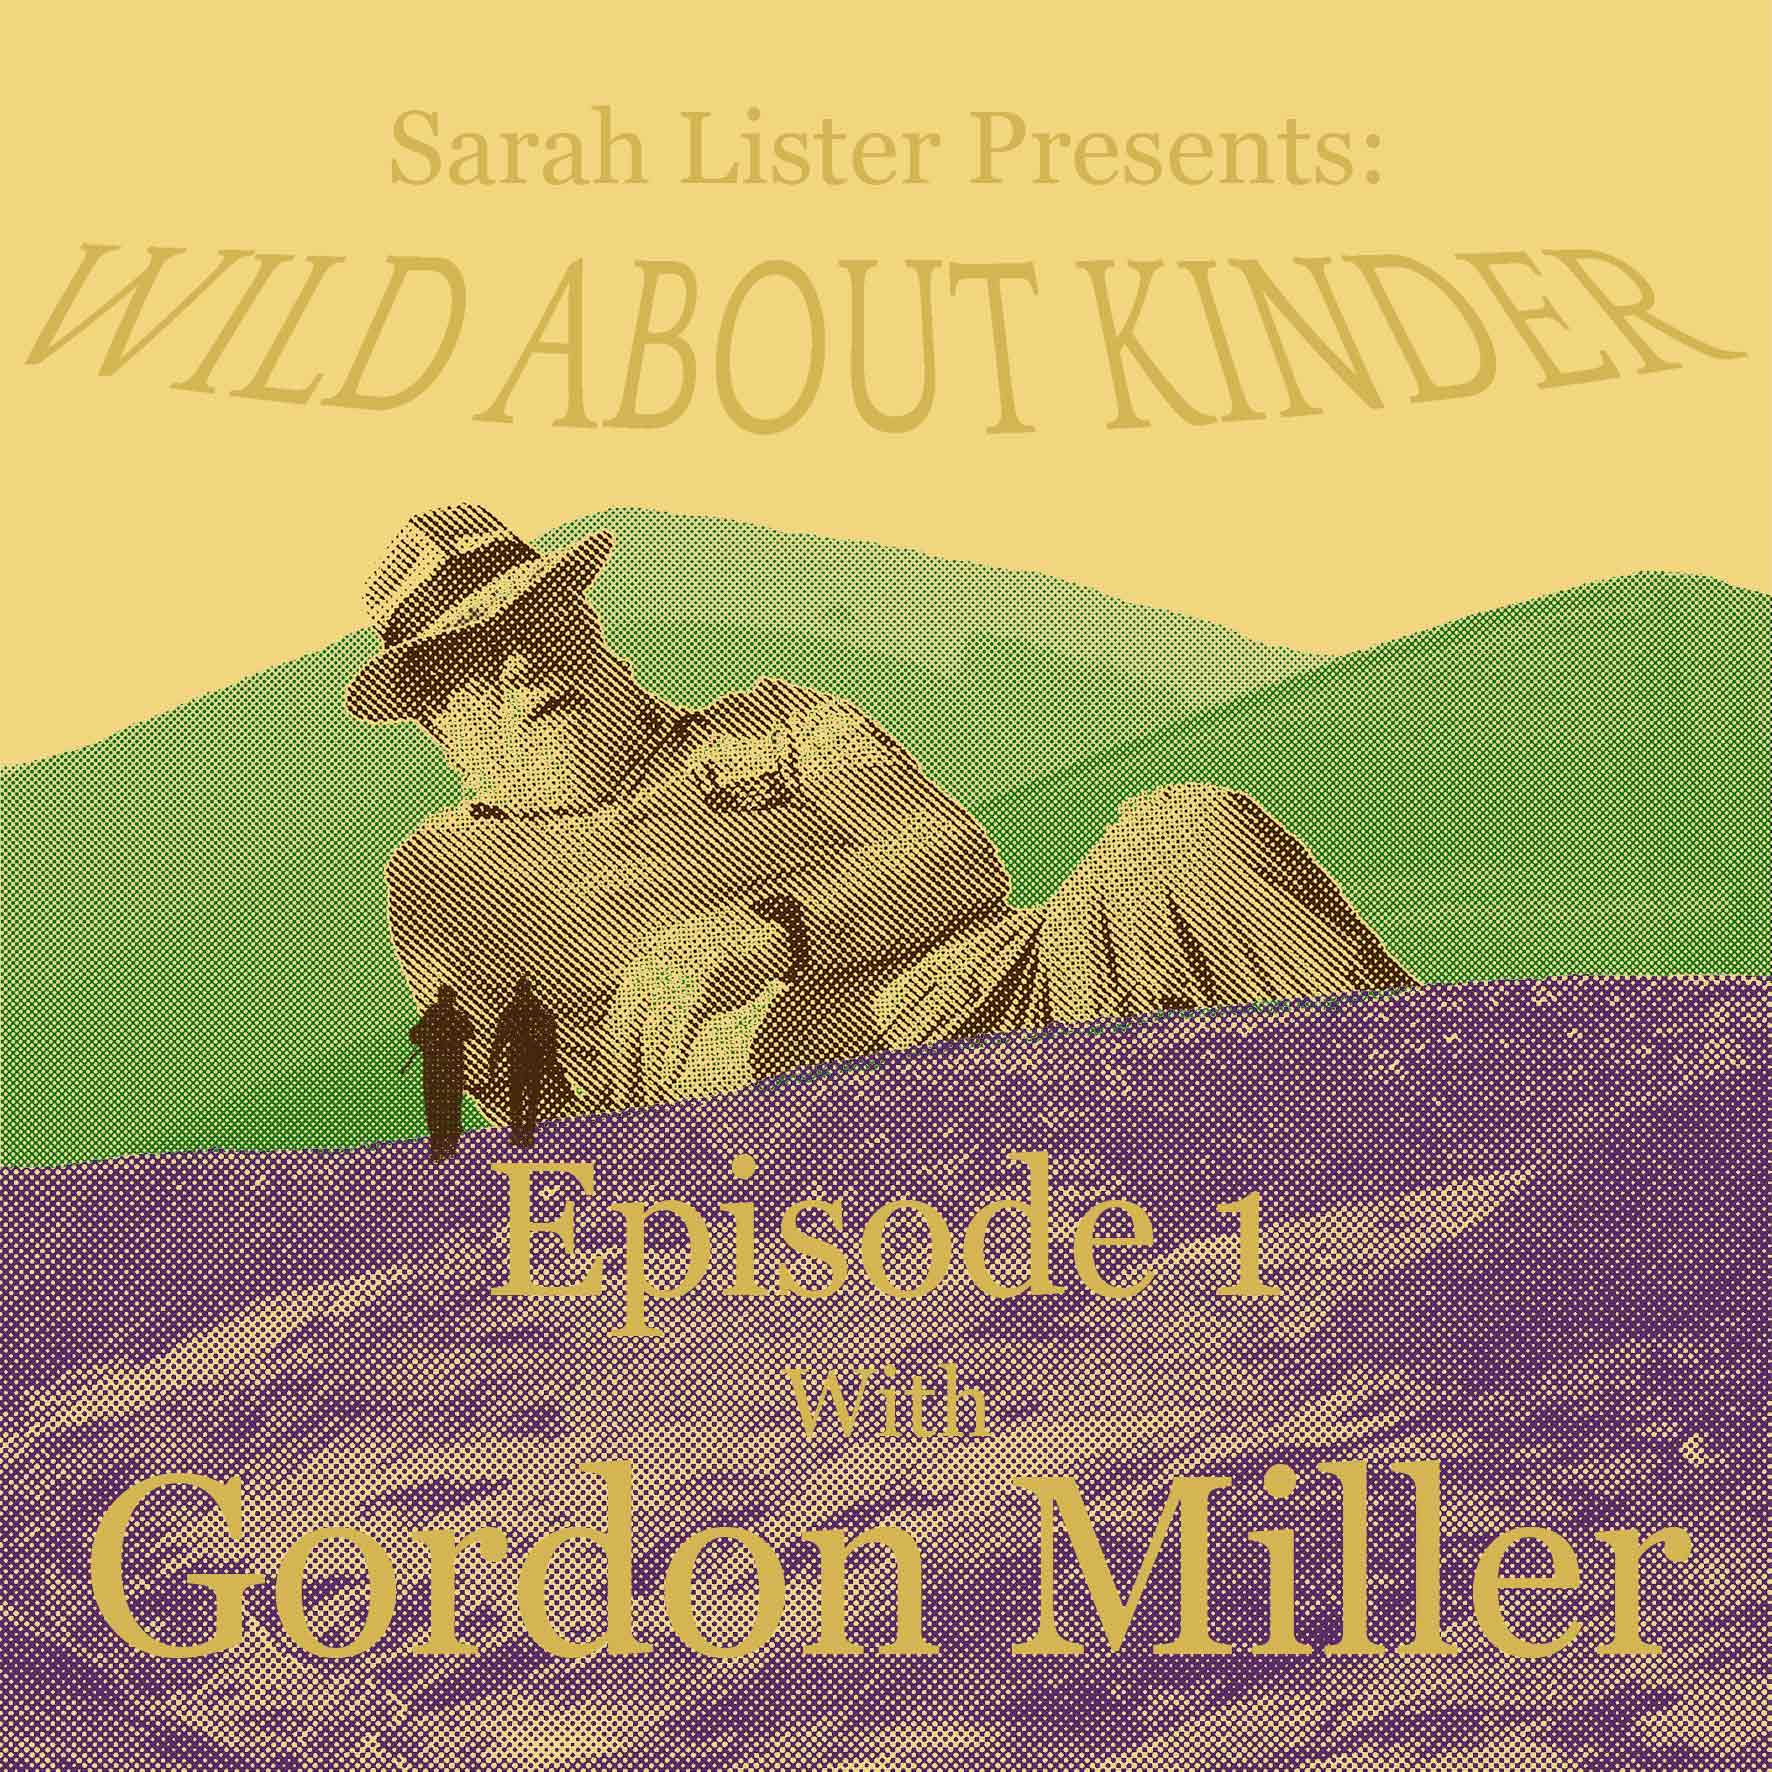 Artwork for podcast Wild About Kinder